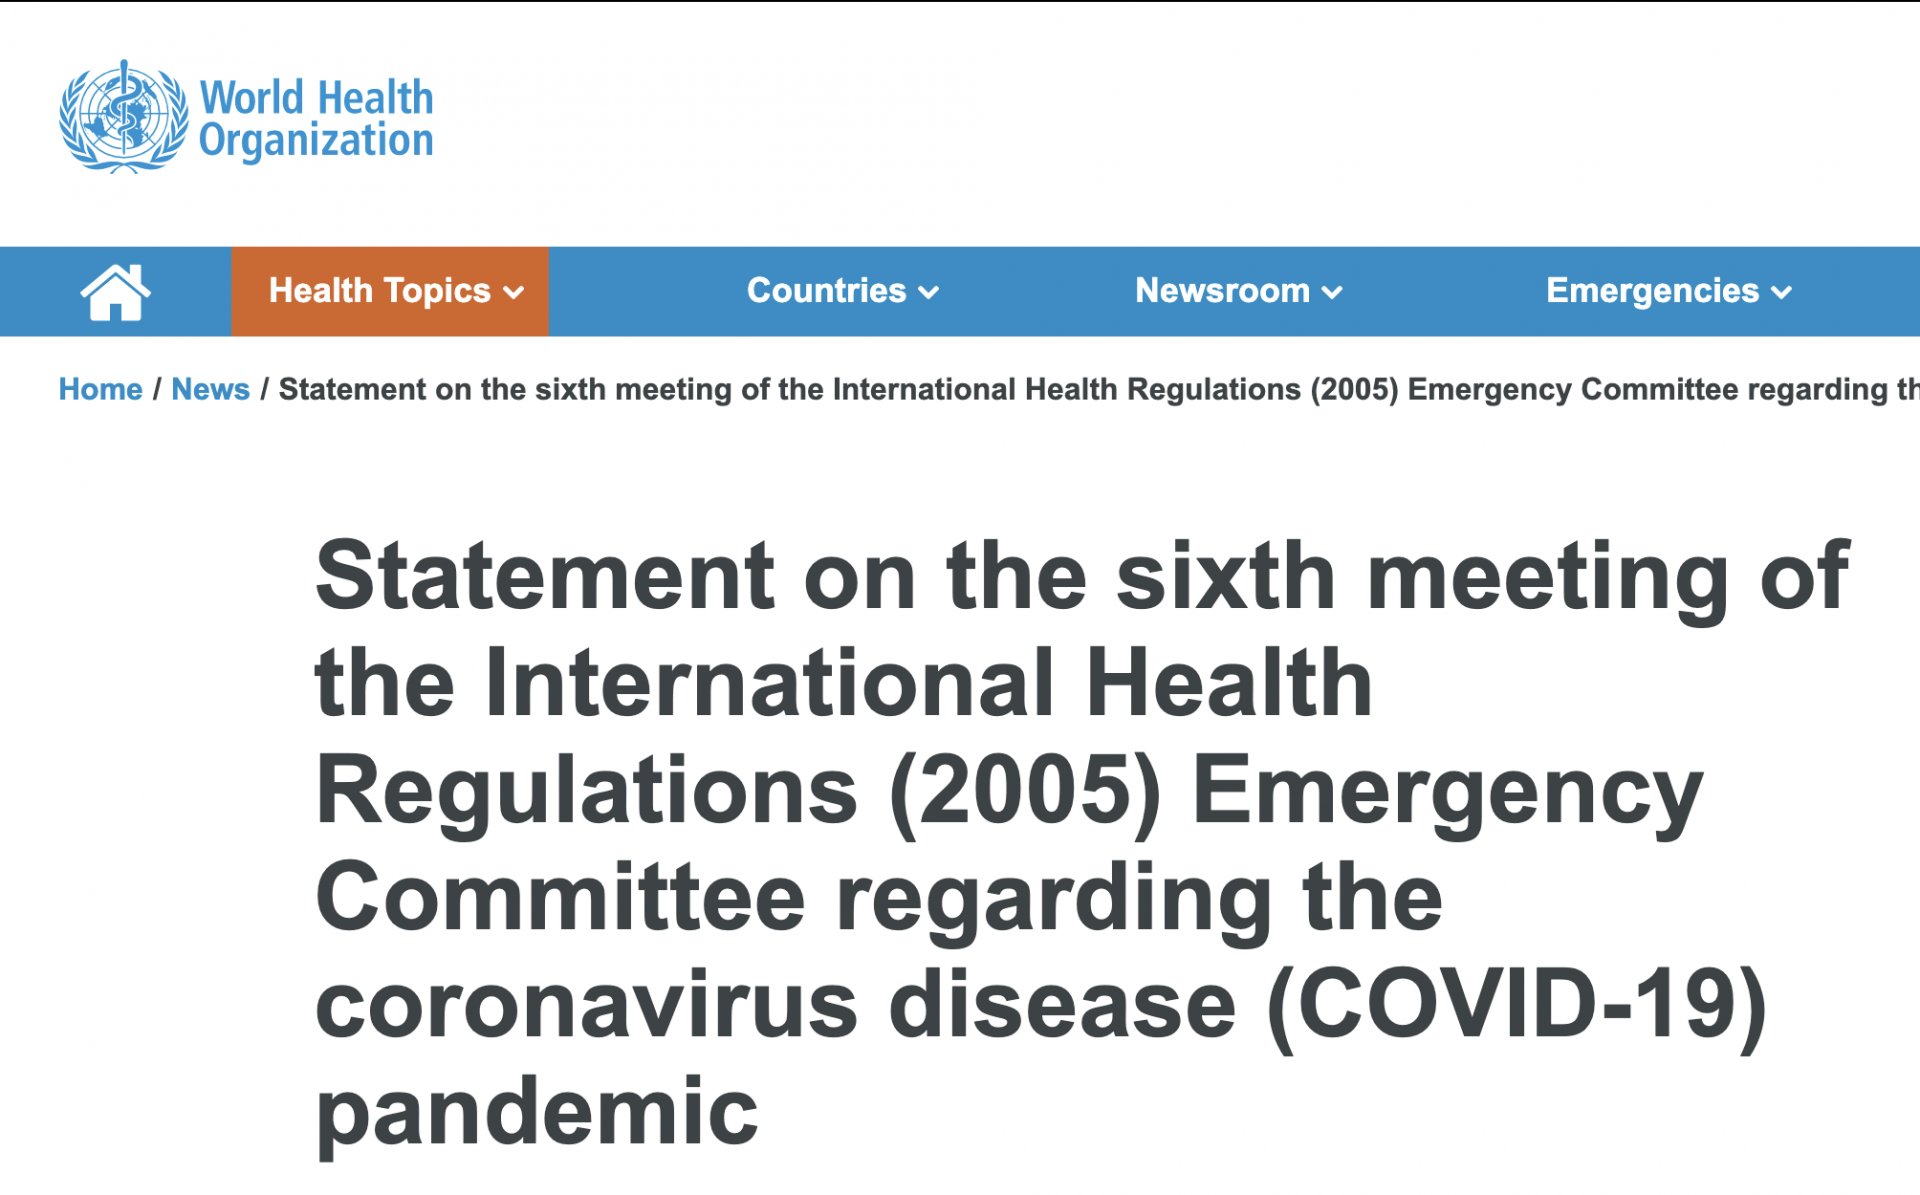 Statement on the sixth meeting of the International Health Regulations (2005) Emergency Committee regarding the coronavirus disease (COVID-19) pandemic